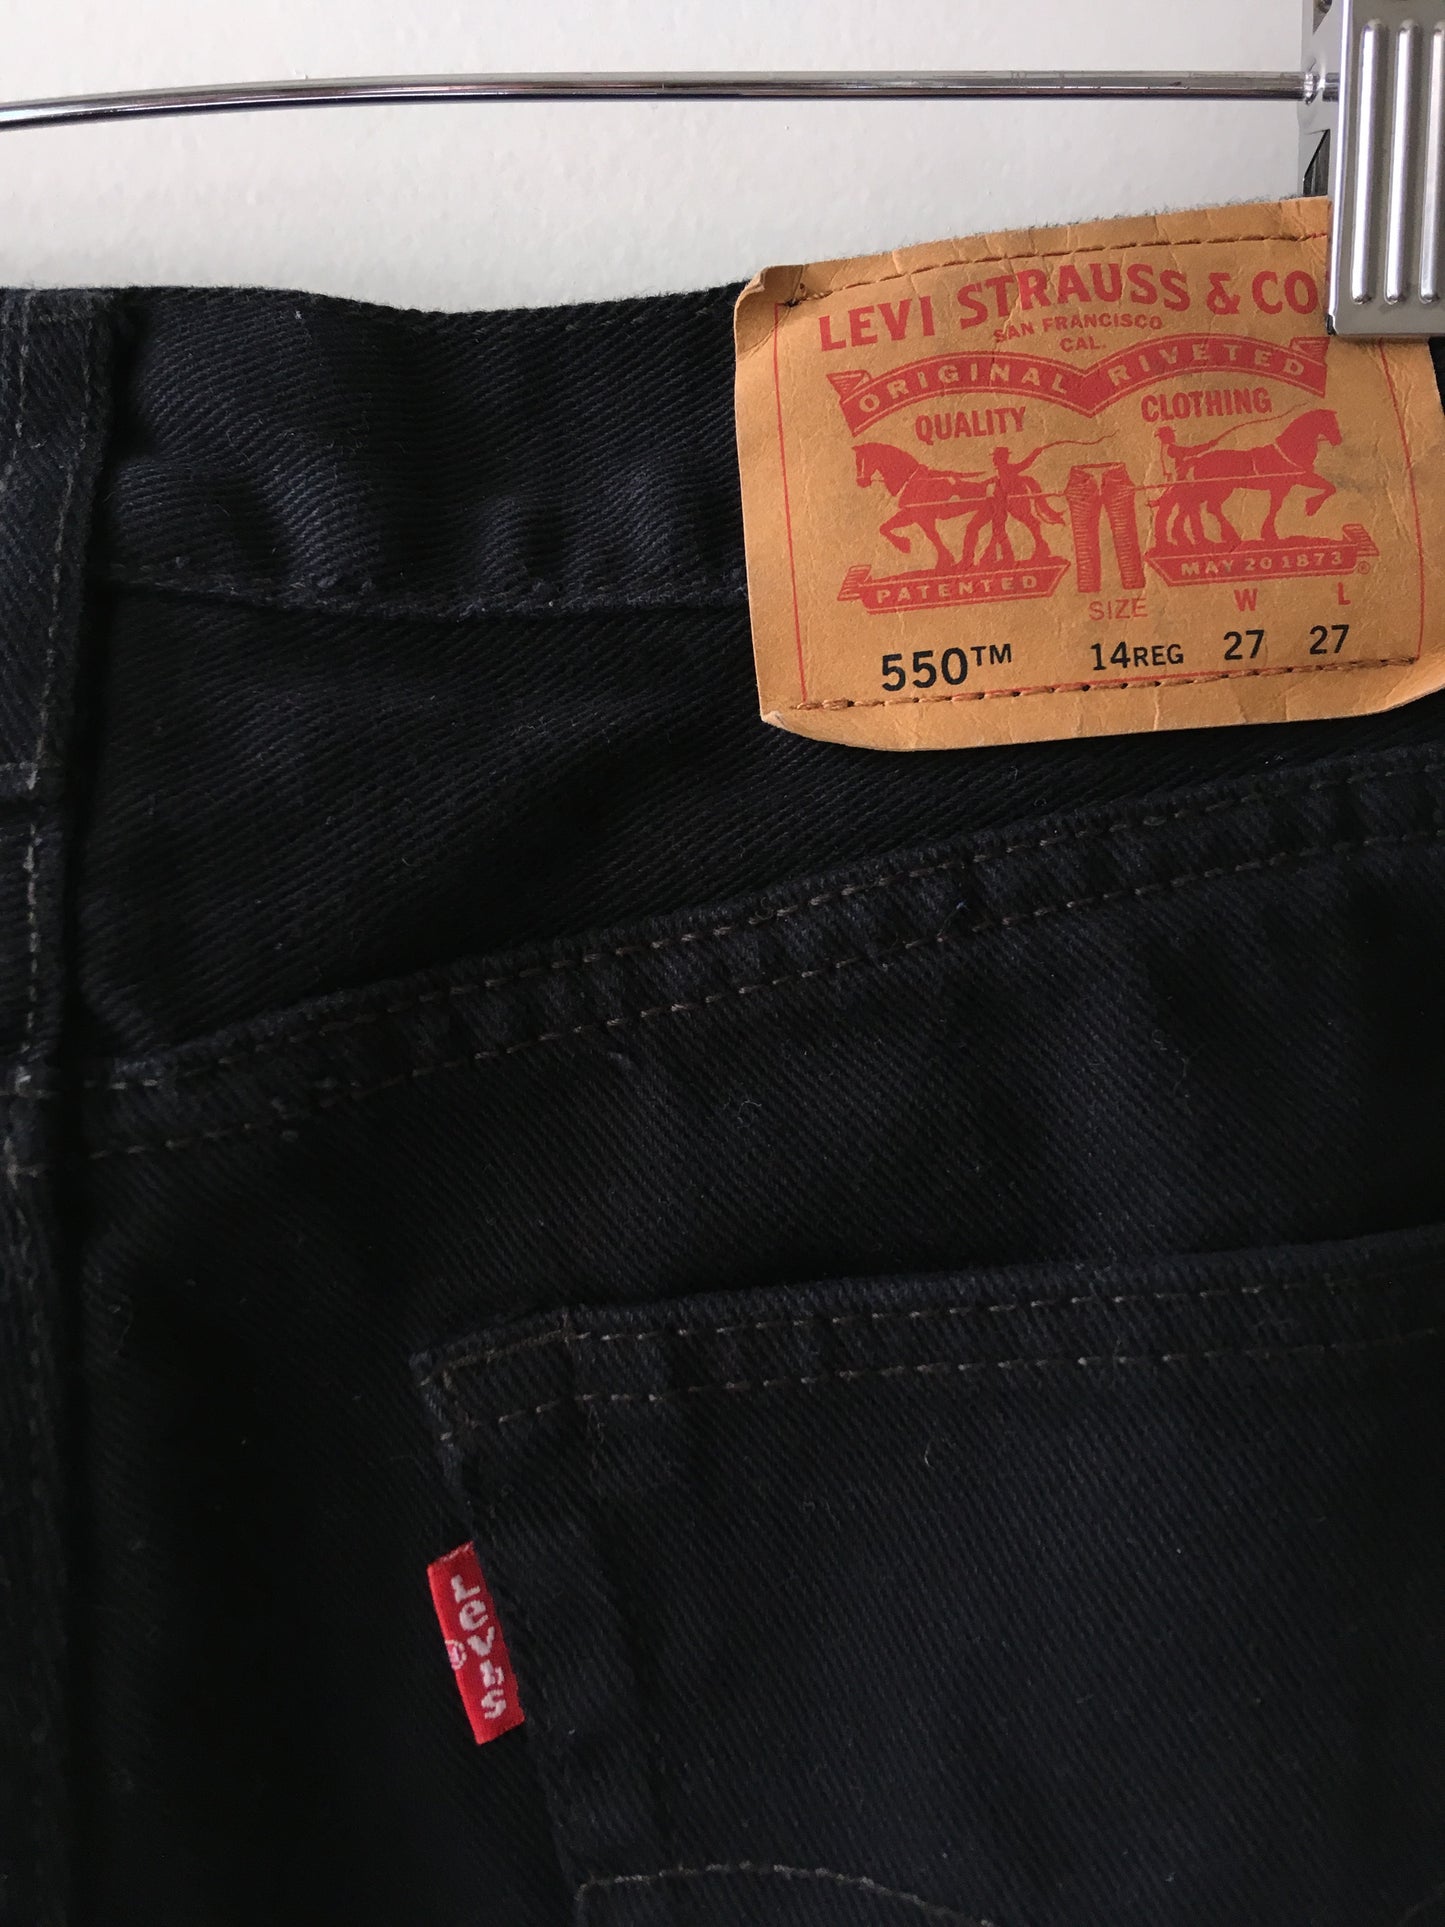 Levi's Black Jeans